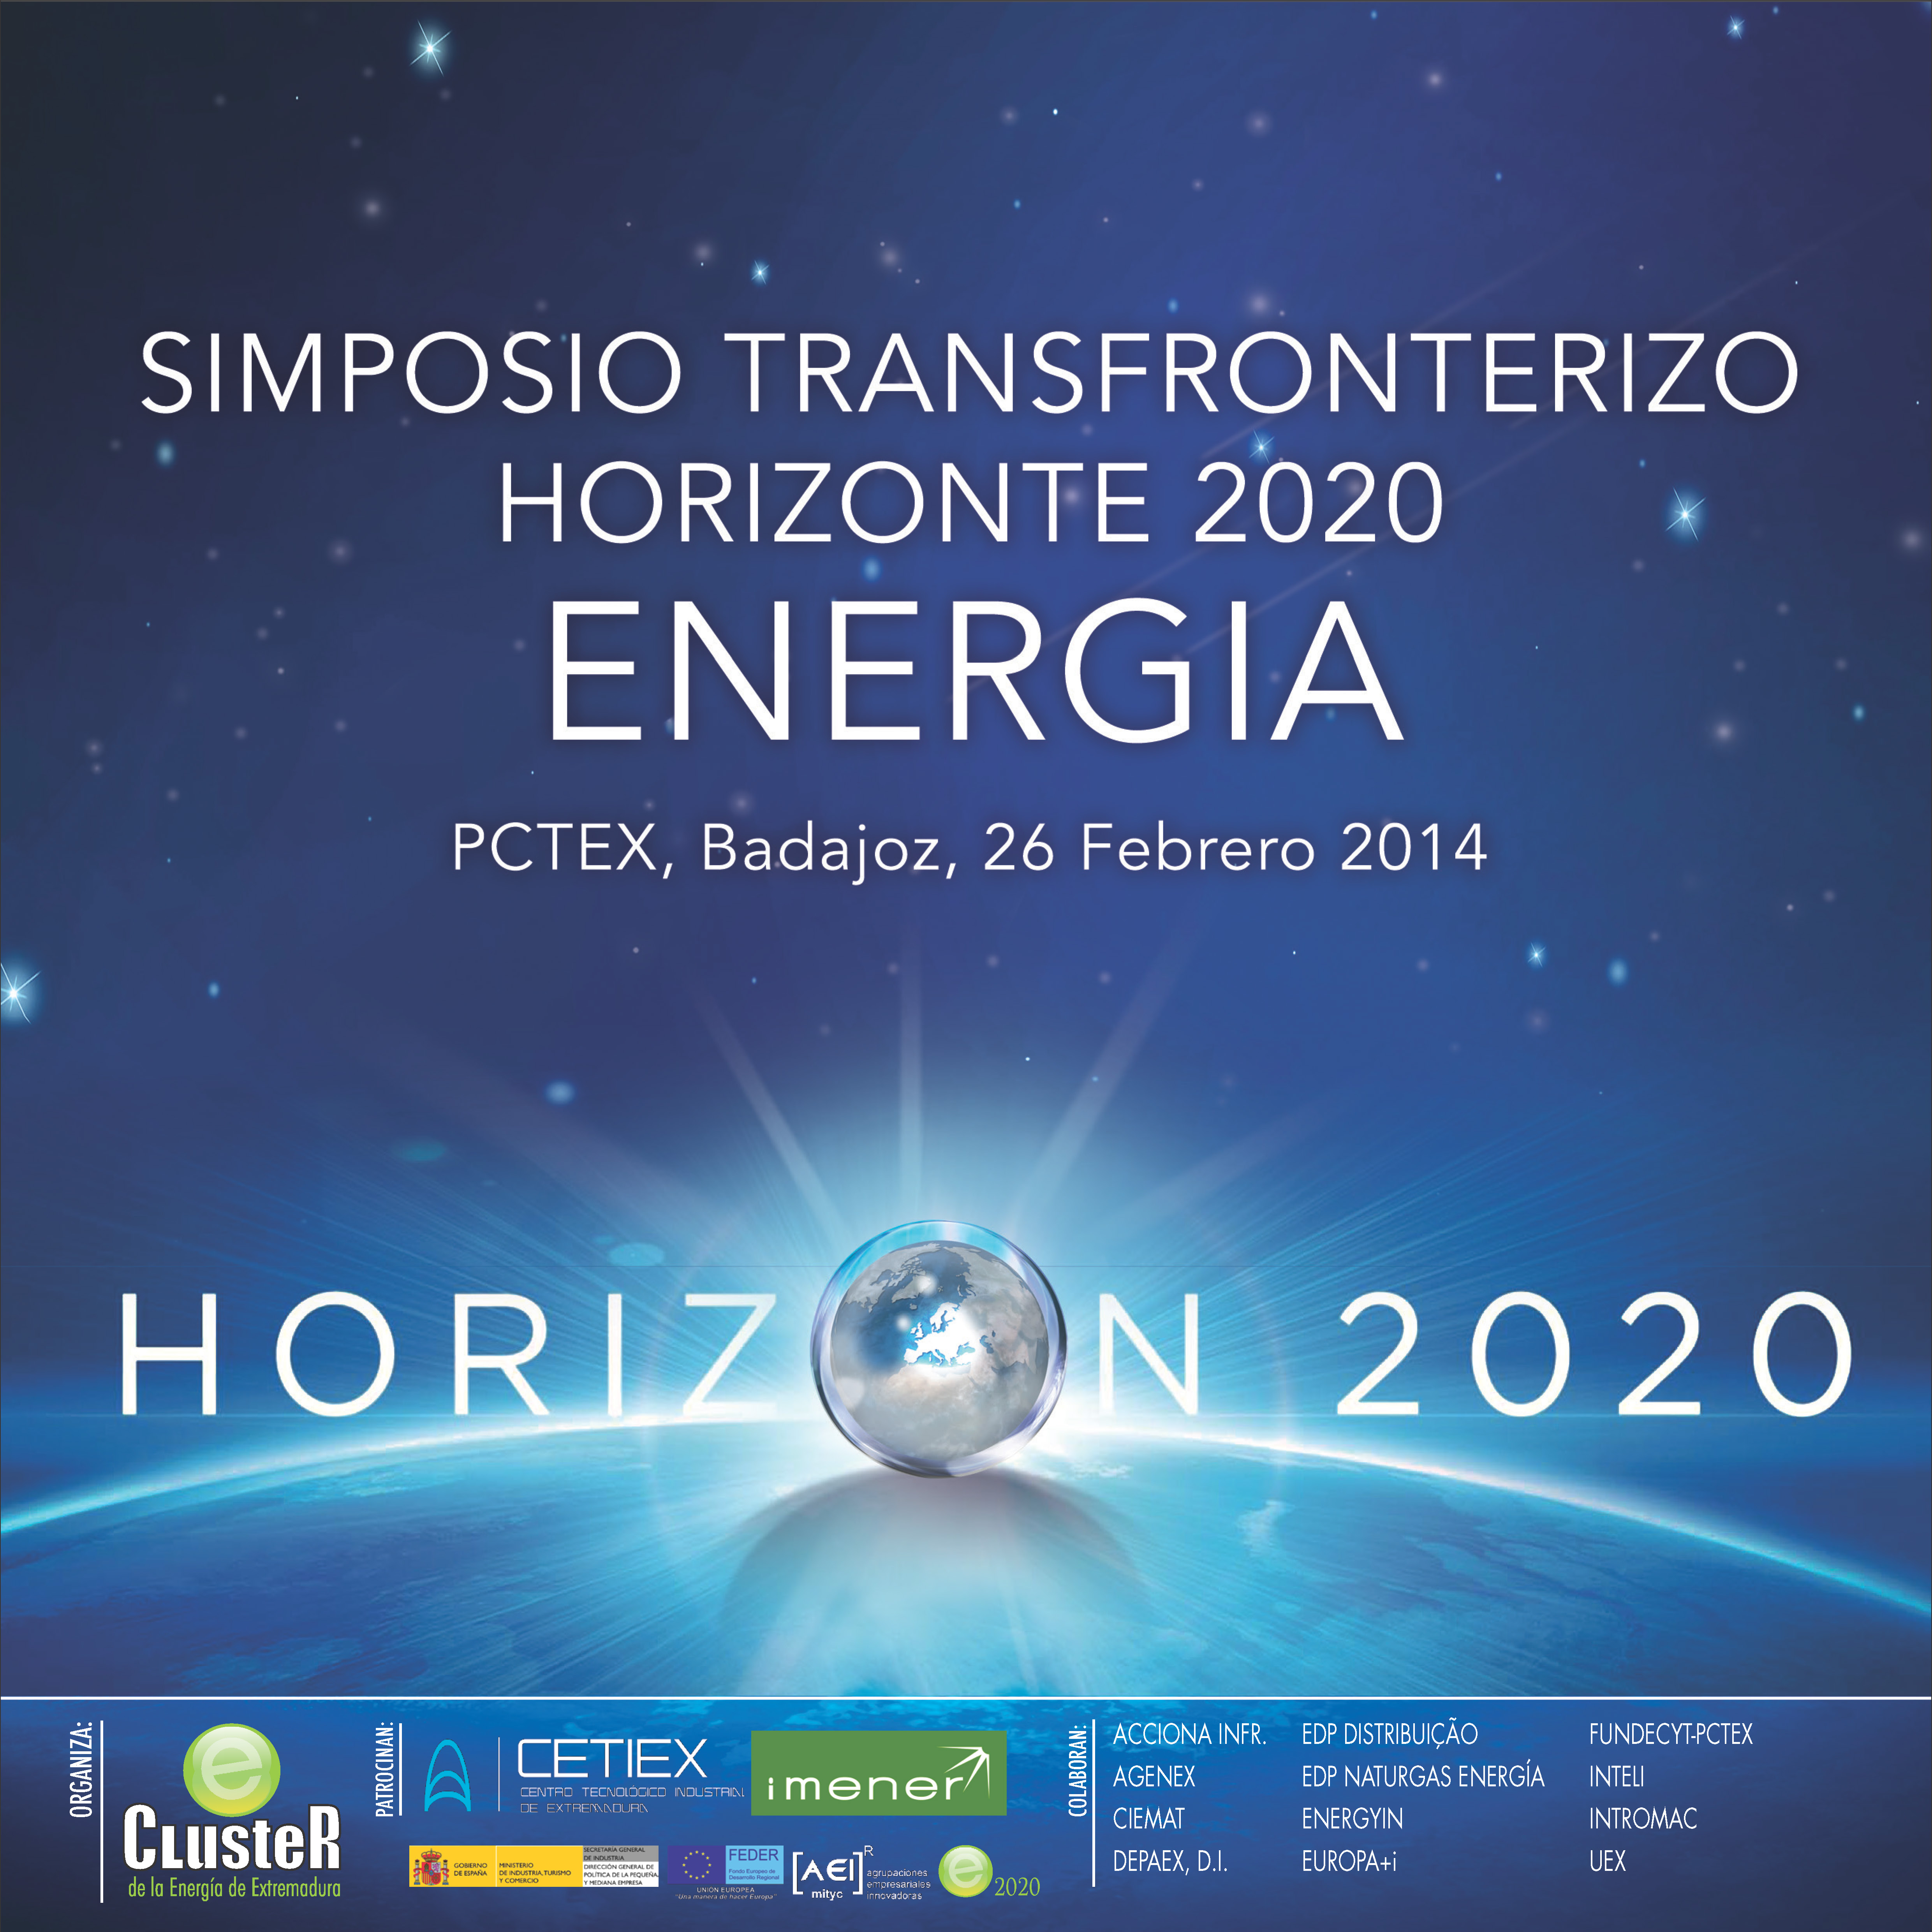 Simposio transfronterizo de energia horizonte 2020